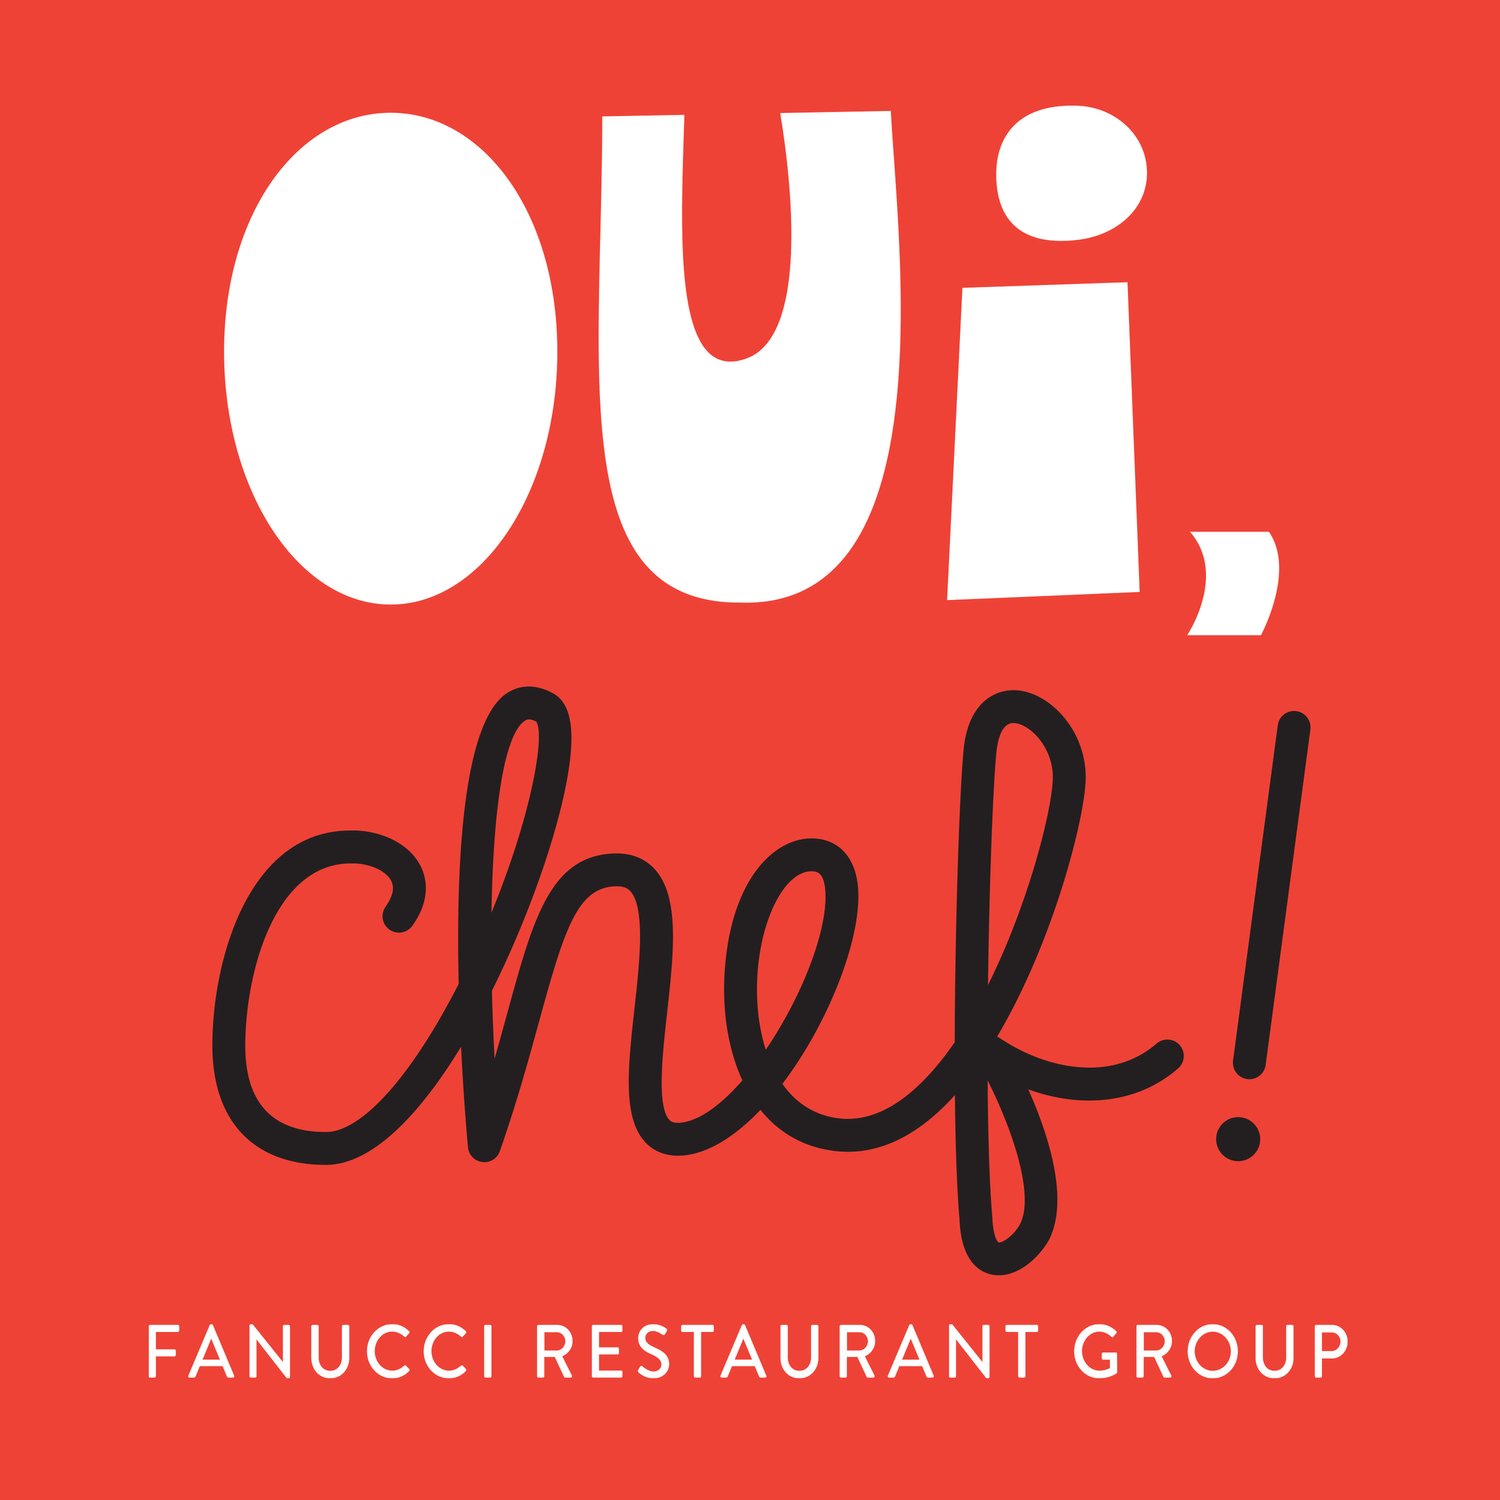 Fanucci Restaurant Group